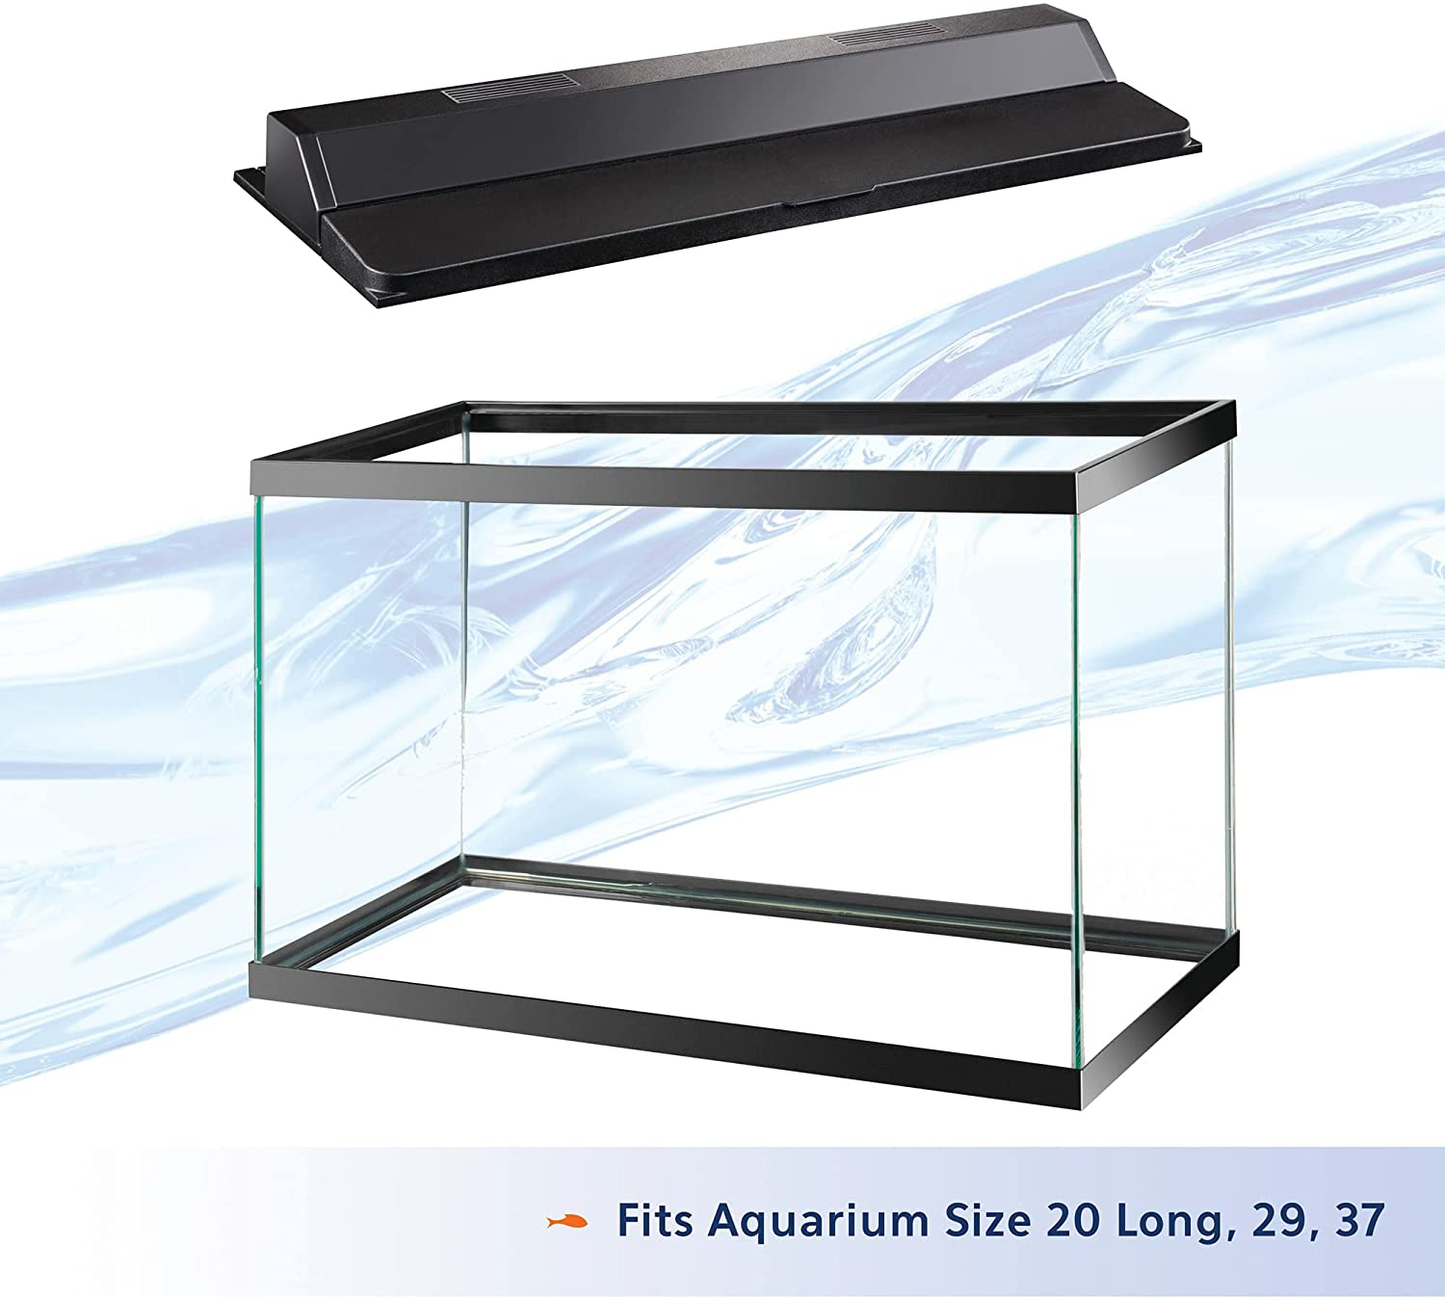 All Glass Aquarium AAG21230 Fluorescent Deluxe Hood, 30-Inch